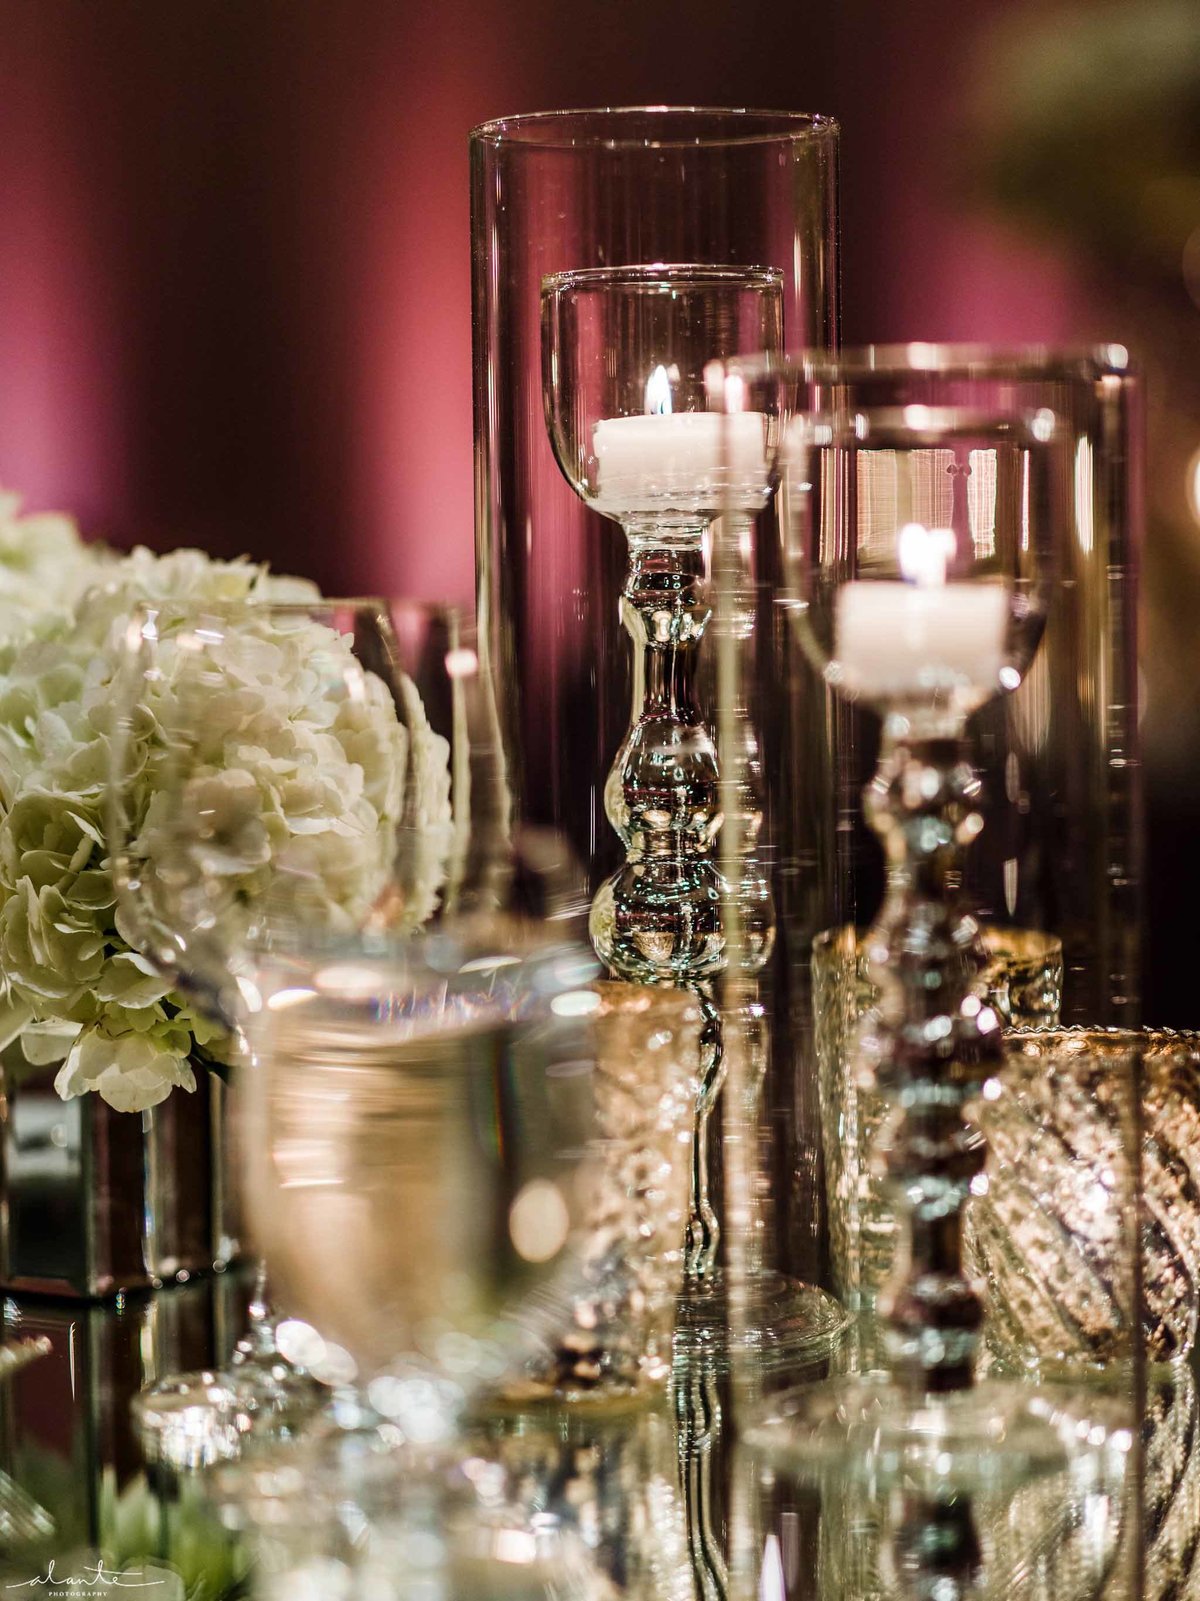 Flora Nova Design created this luxe winter wedding.